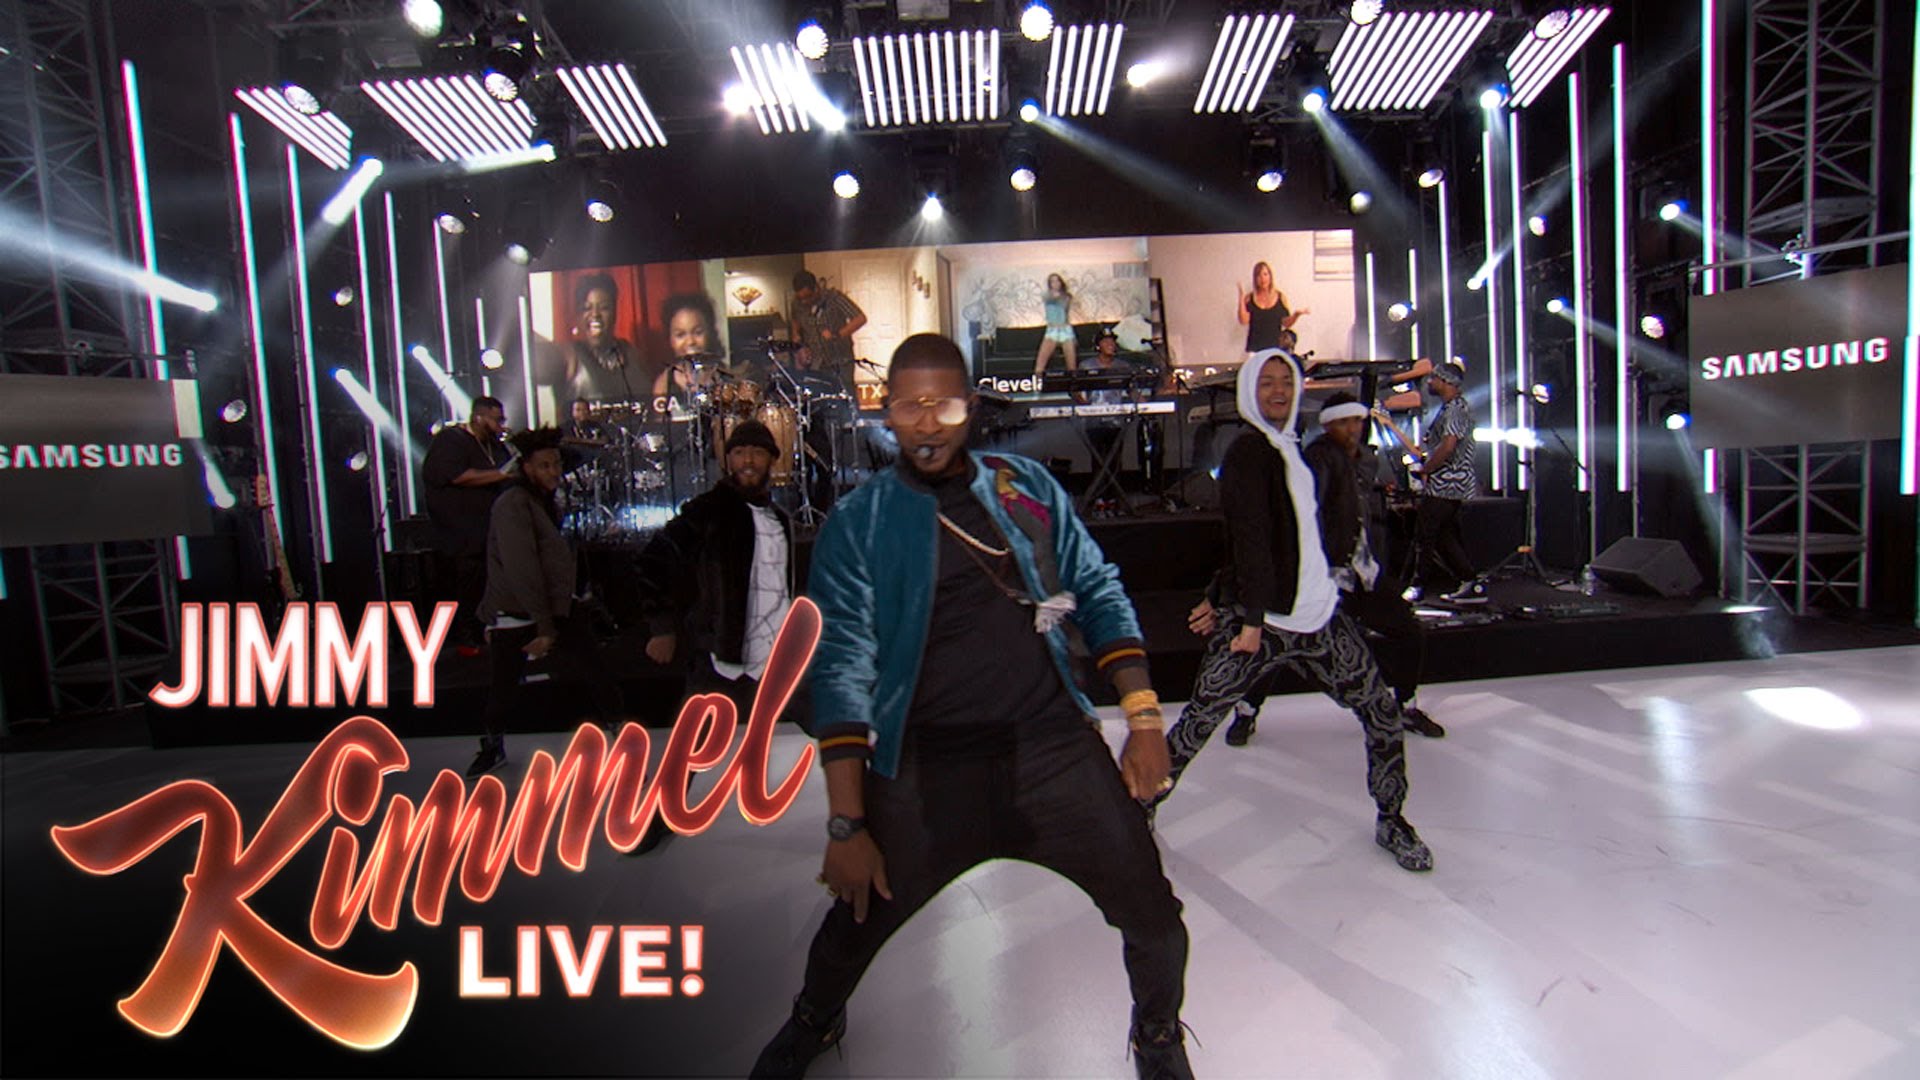 Usher Performs “No Limit” on “Jimmy Kimmel LIVE!” [WATCH]